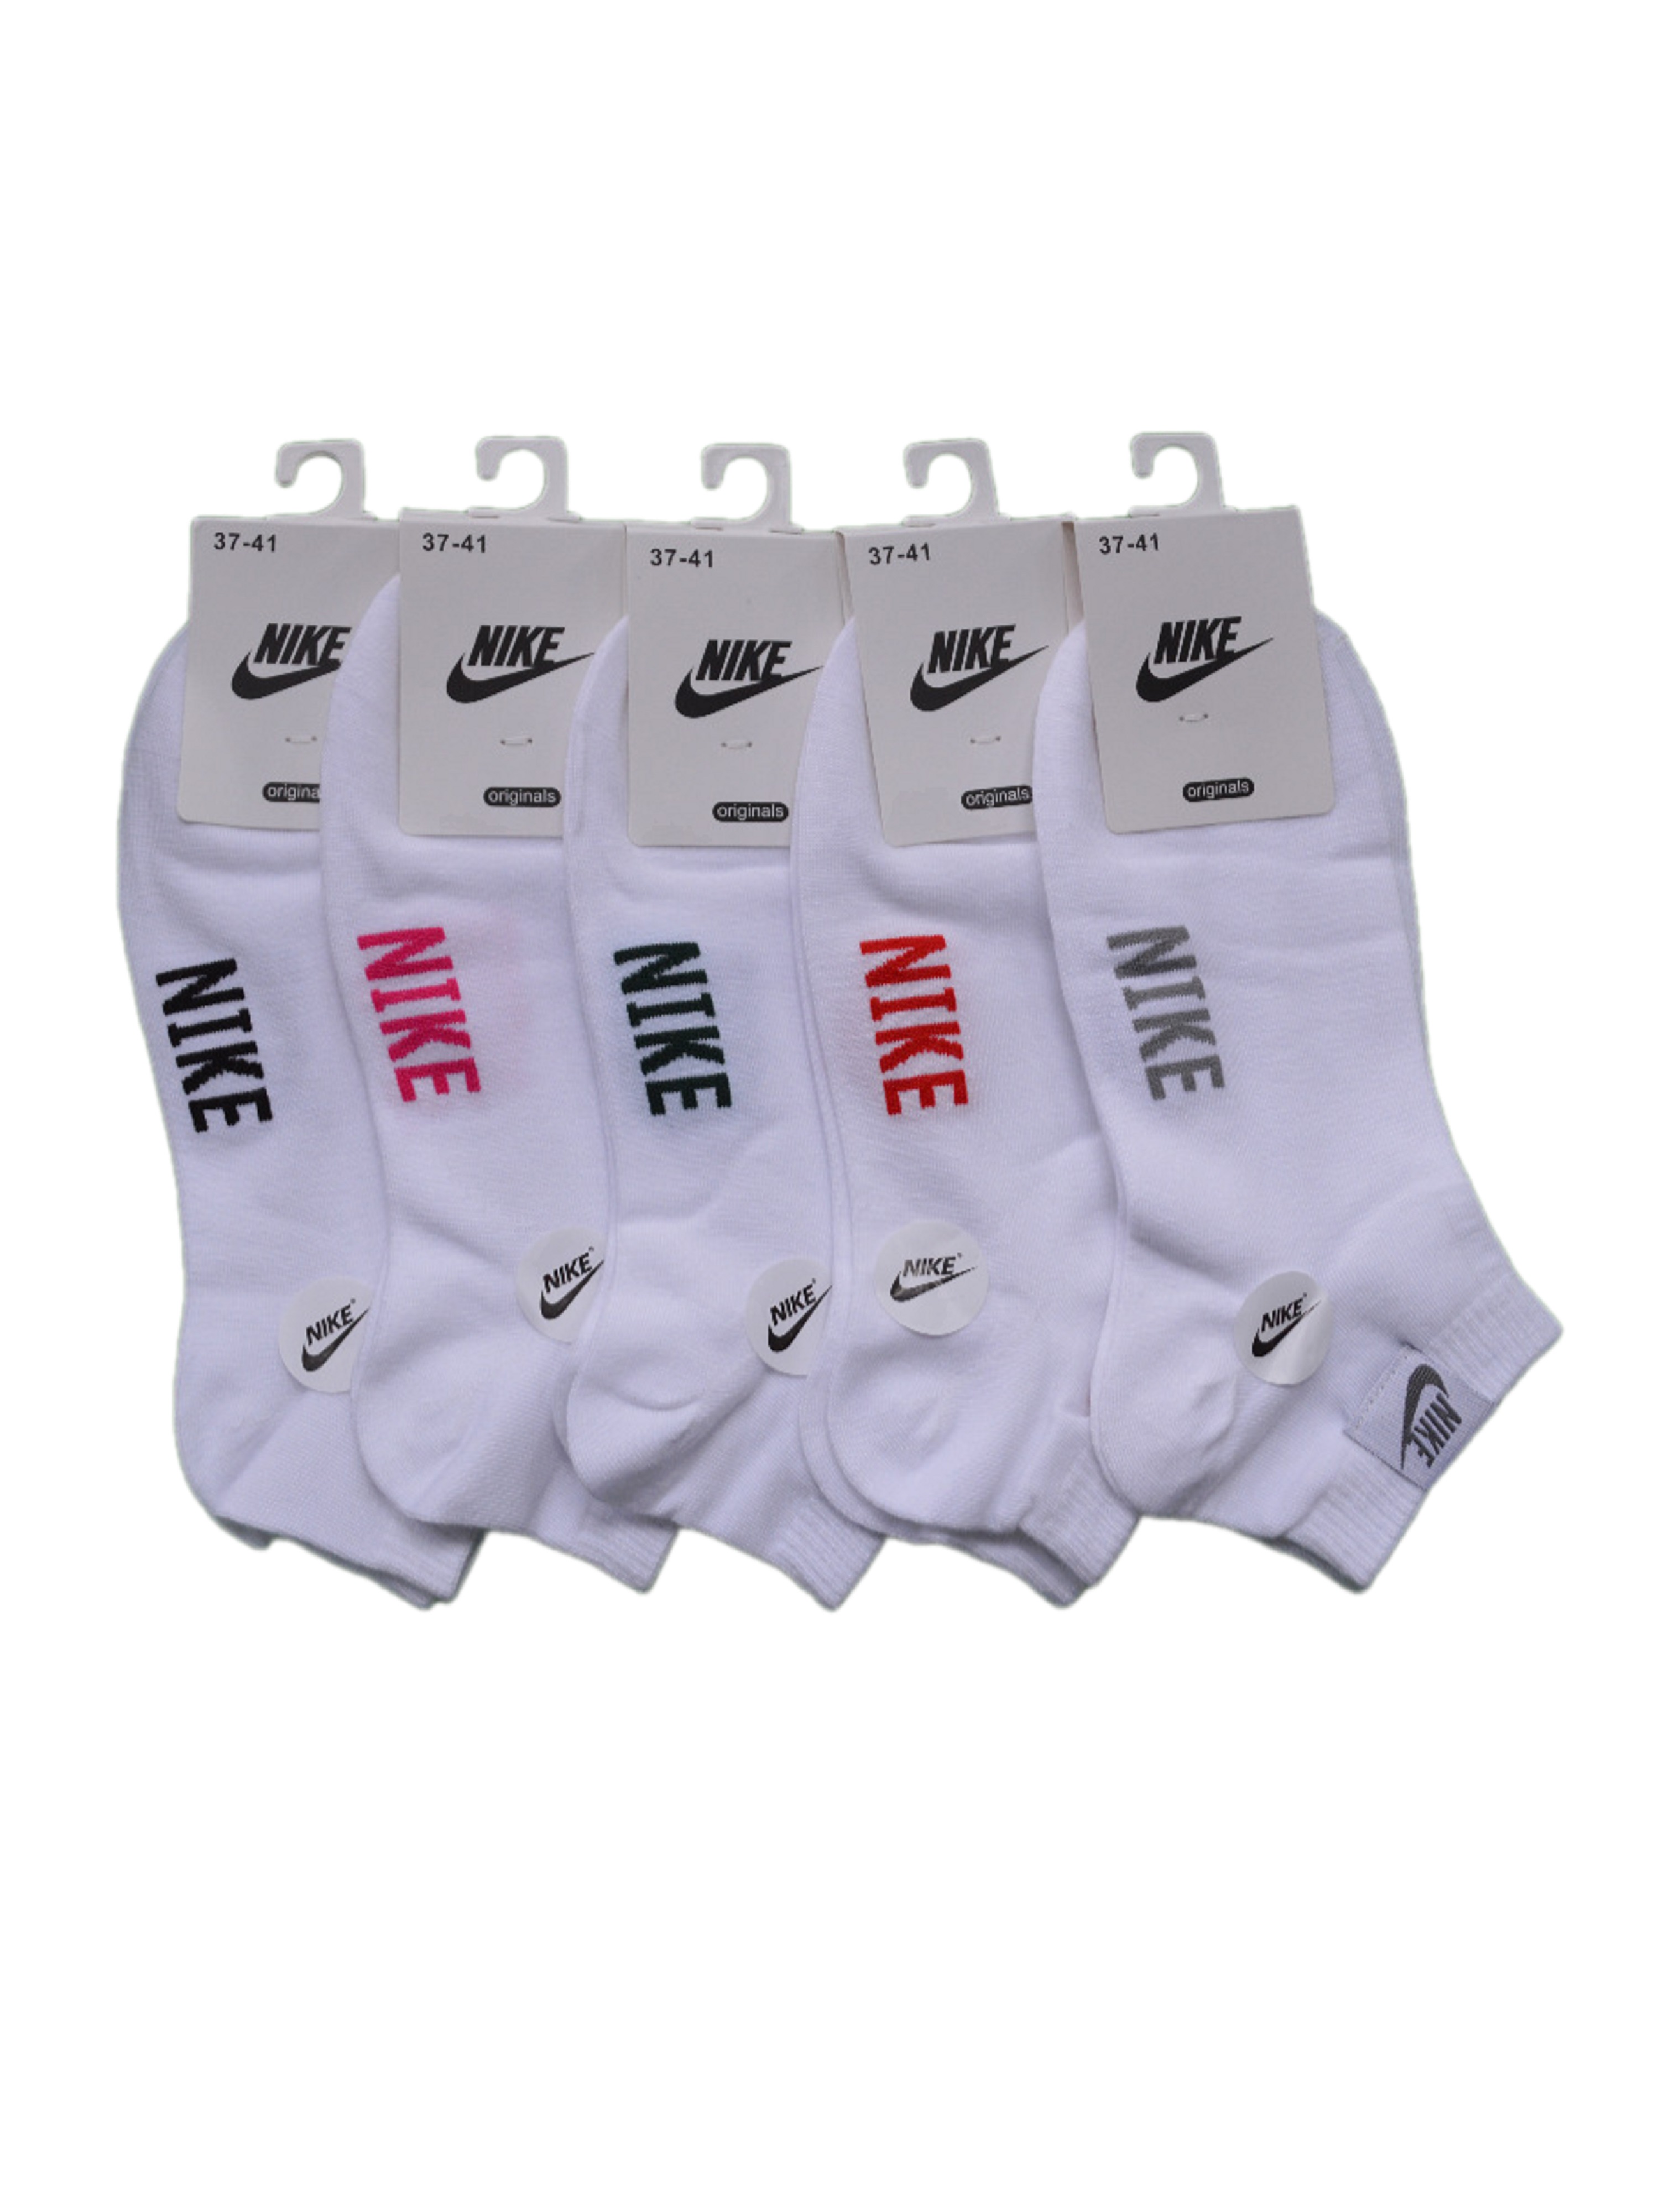 Комплект носков женских Nike NI-WL-98 белых 37-41, 5 пар